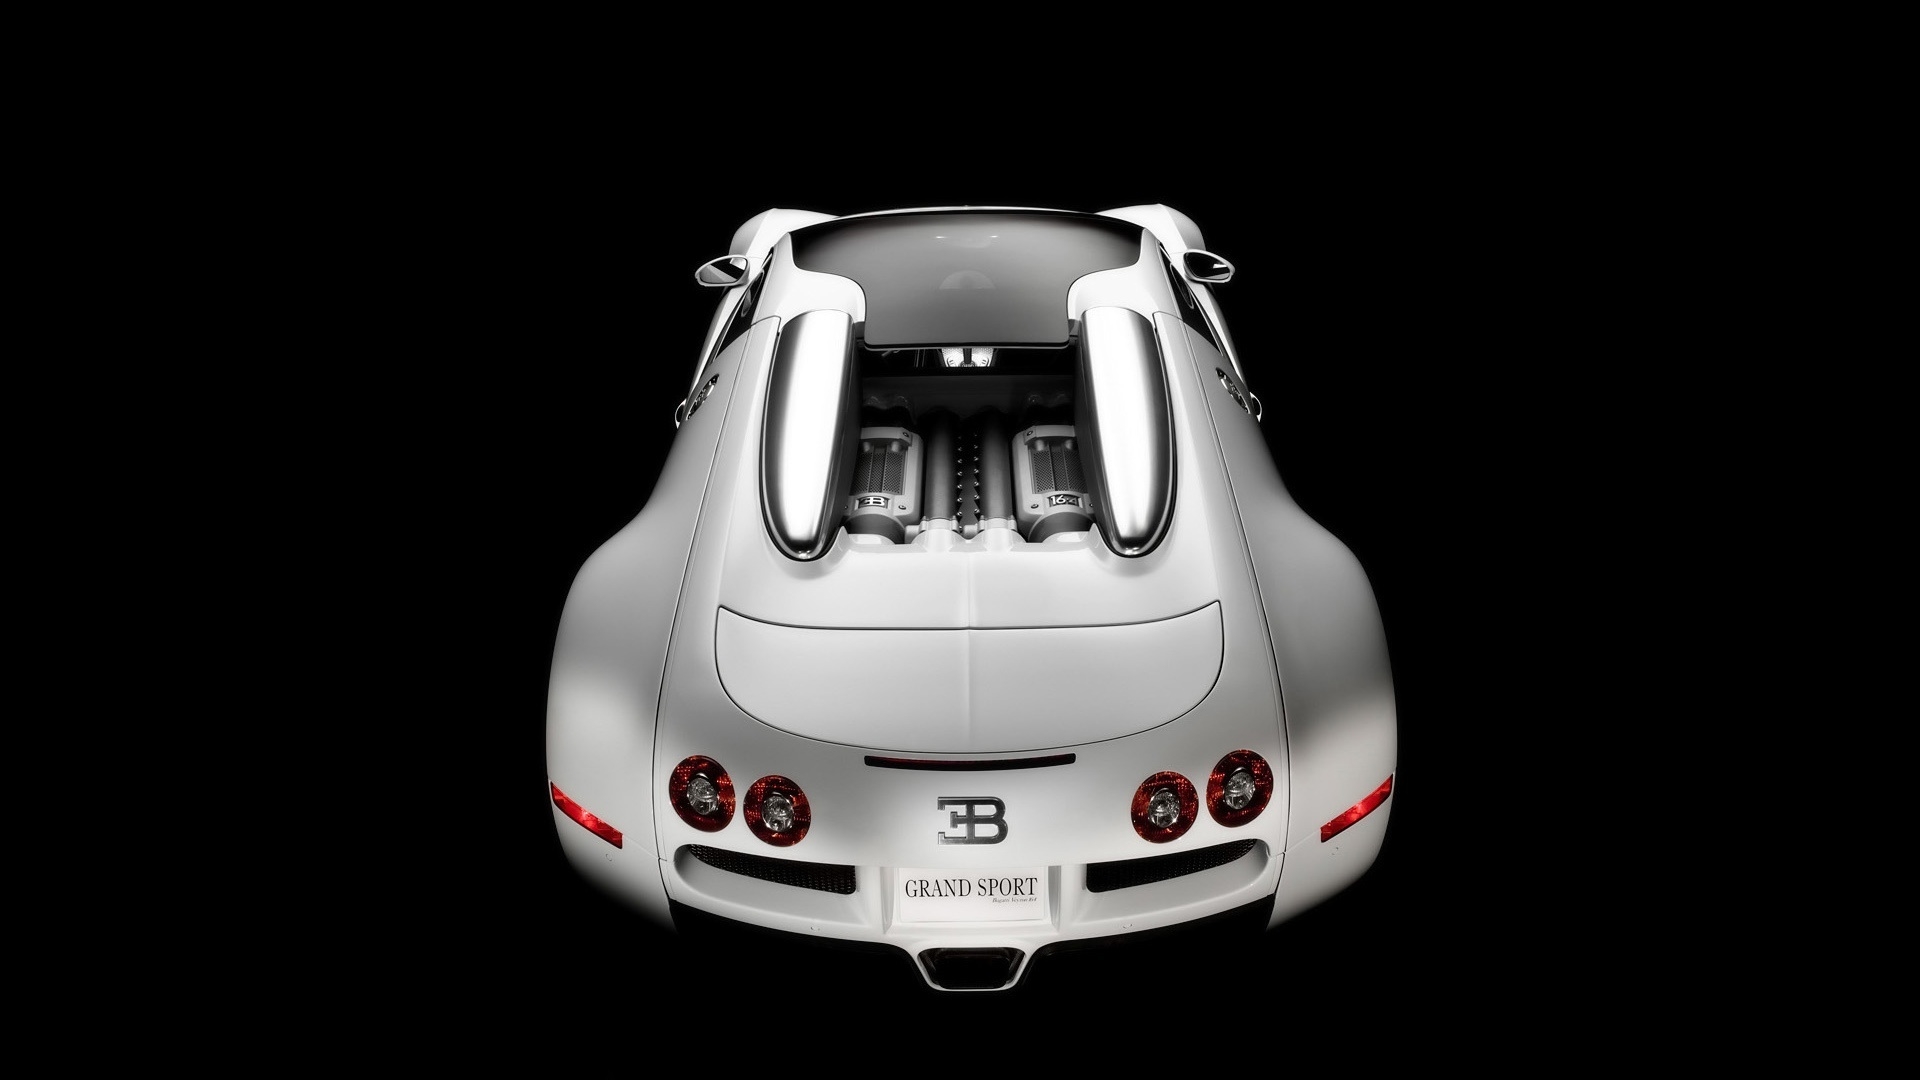 Bugatti Veyron 16.4 Grand Sport Production Version 2009 - Studio Rear Top for 1920 x 1080 HDTV 1080p resolution